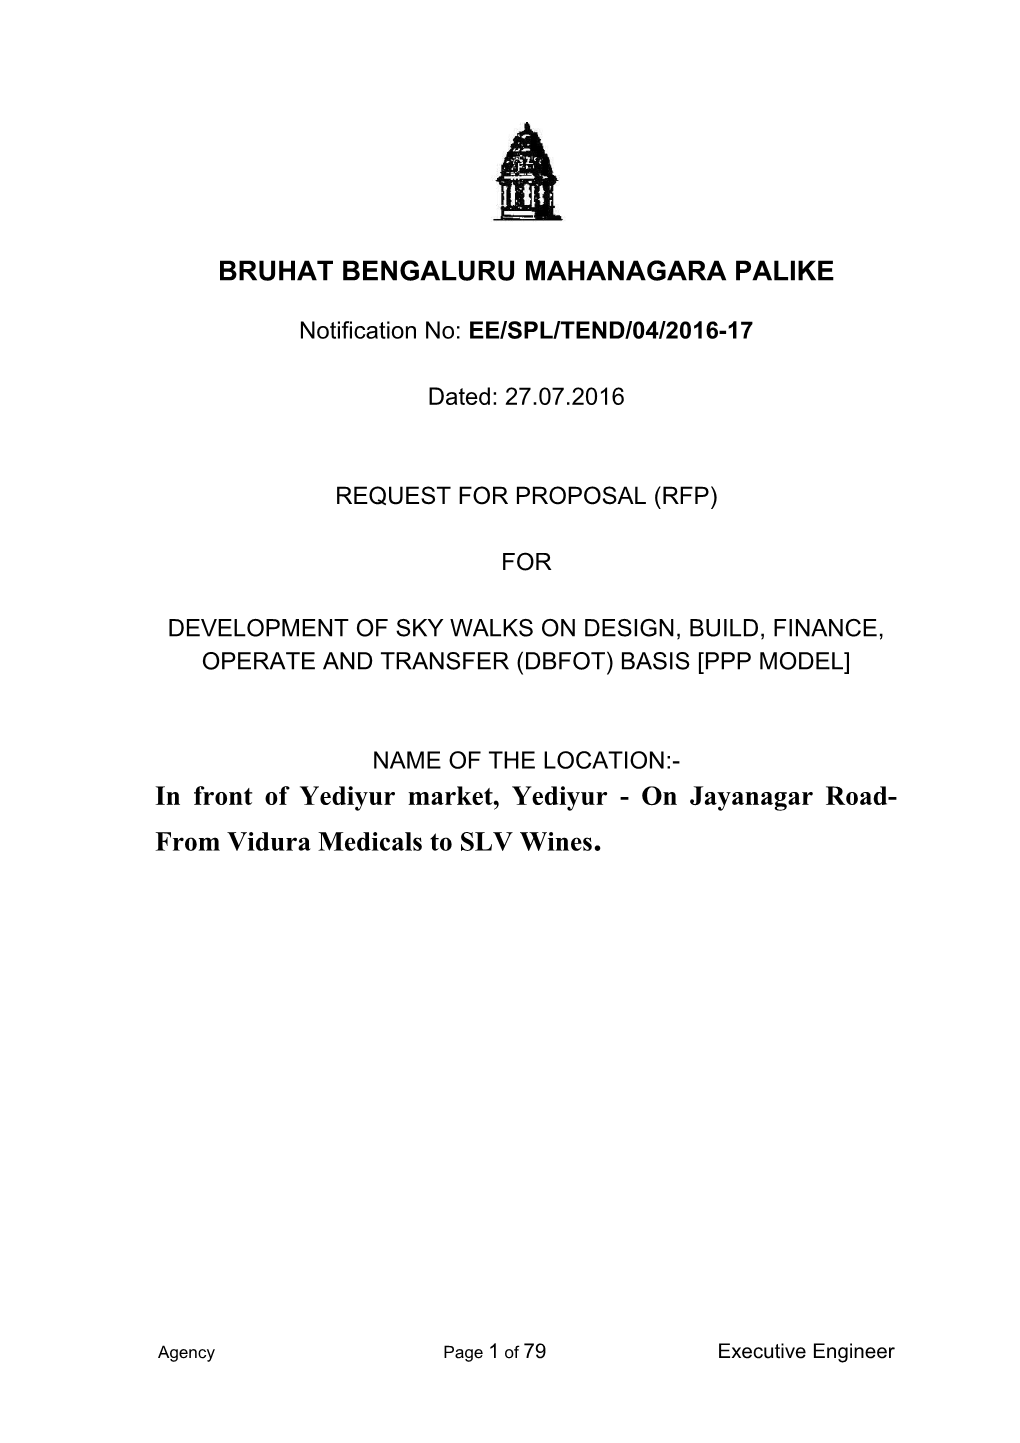 Bruhat Bengaluru Mahanagara Palike